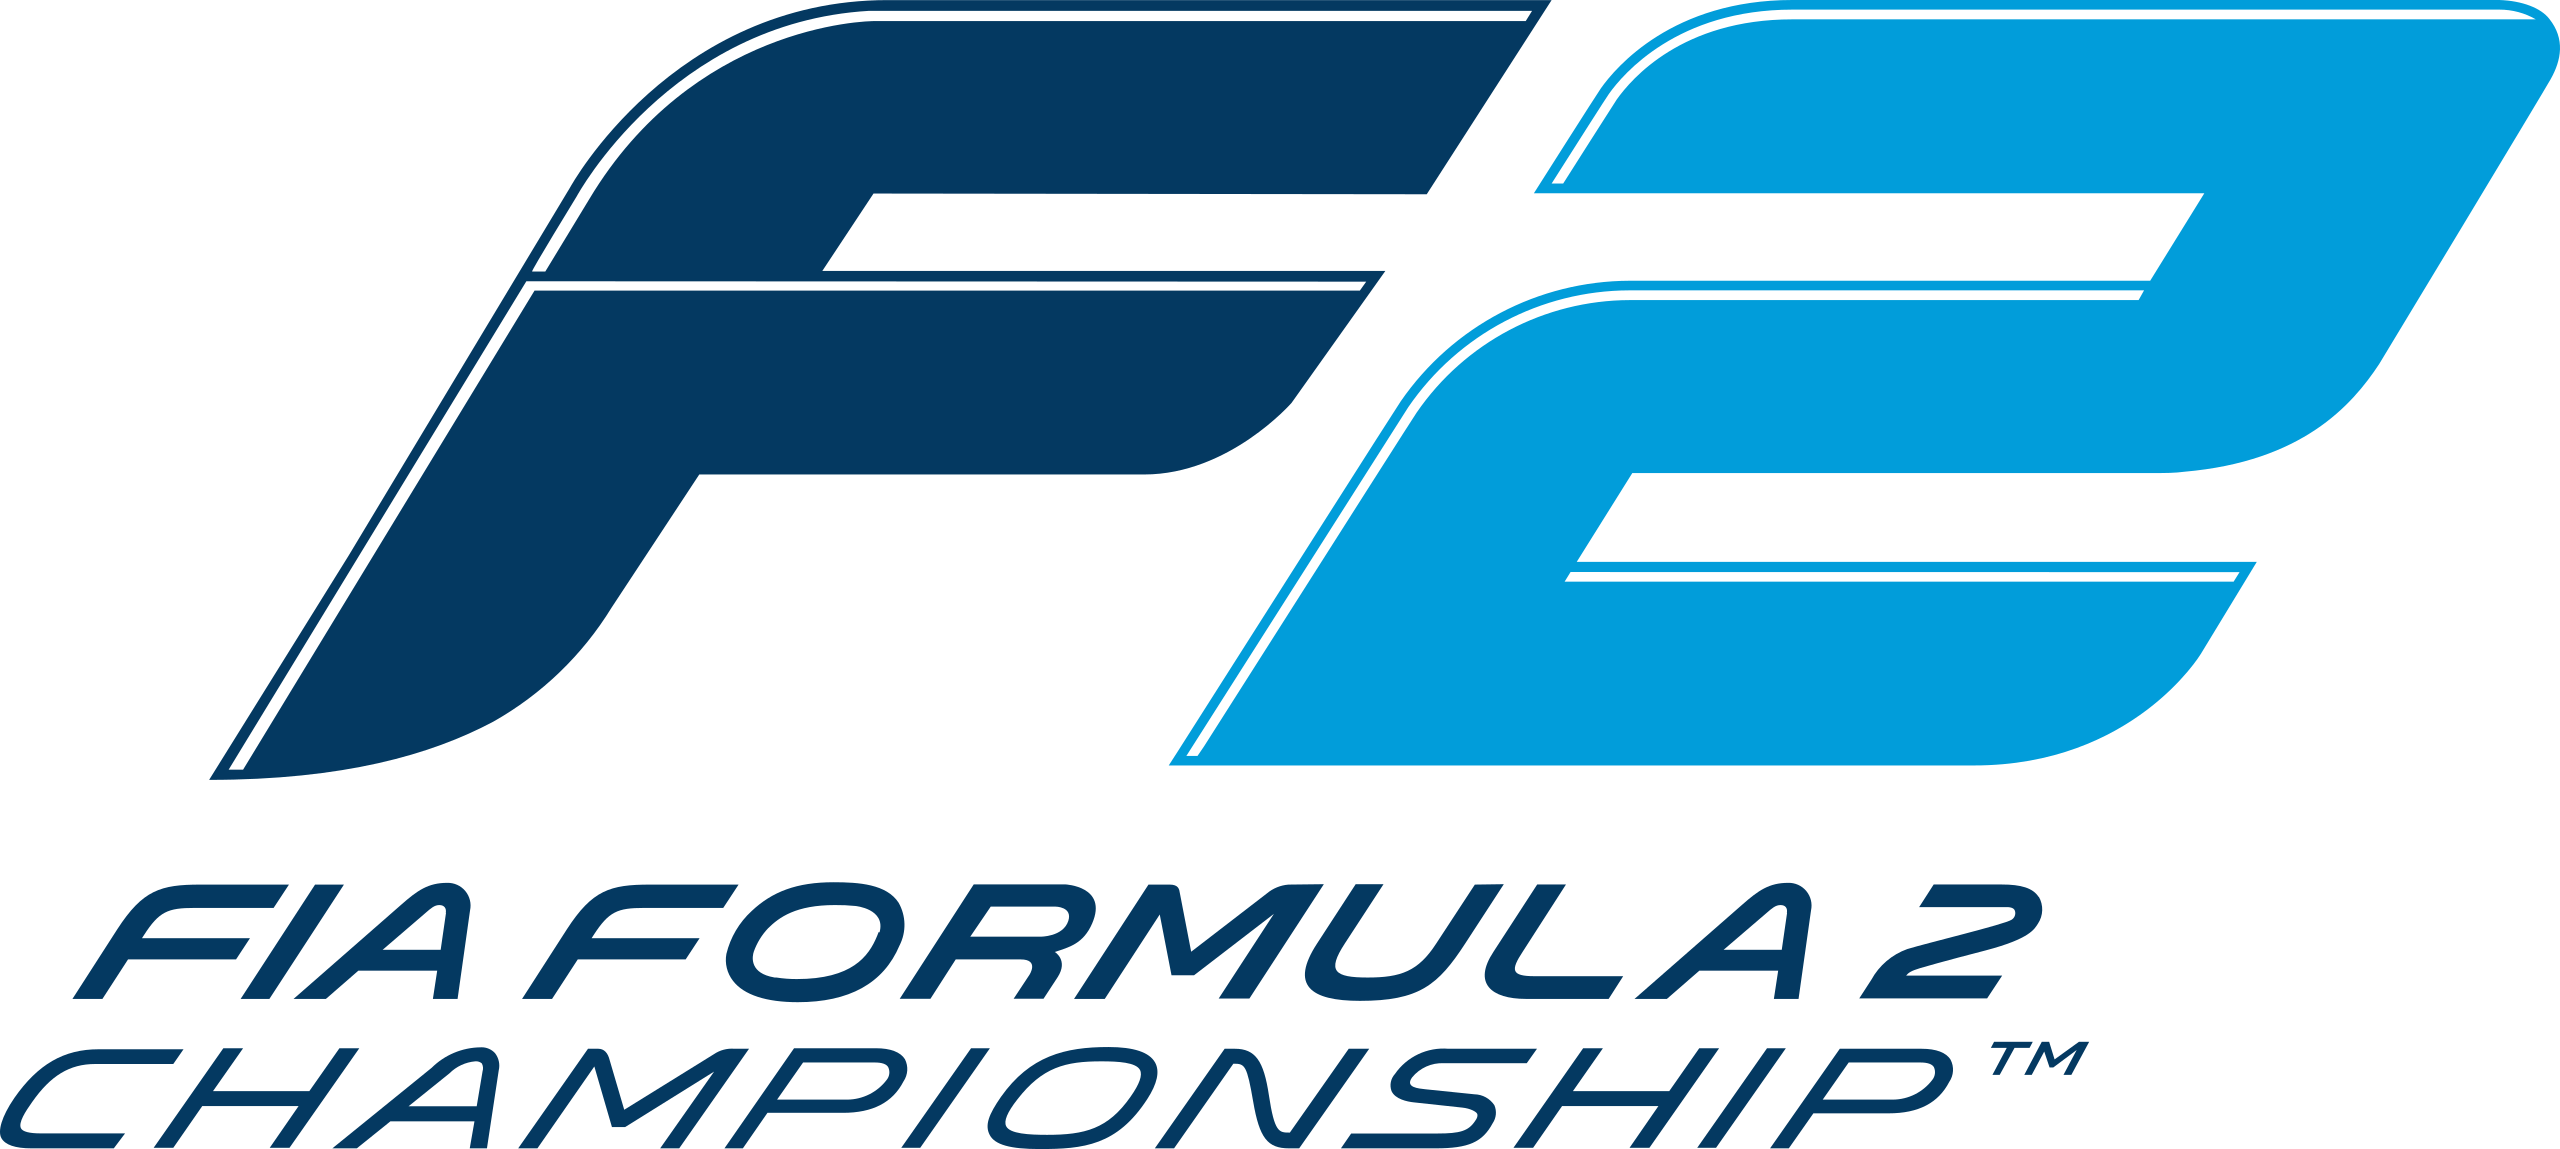 Formule2 2022 GP14 Abu Dhabi Kwalificatie DUTCH 720p WEB-DL AAC2 0 x264-UGDV